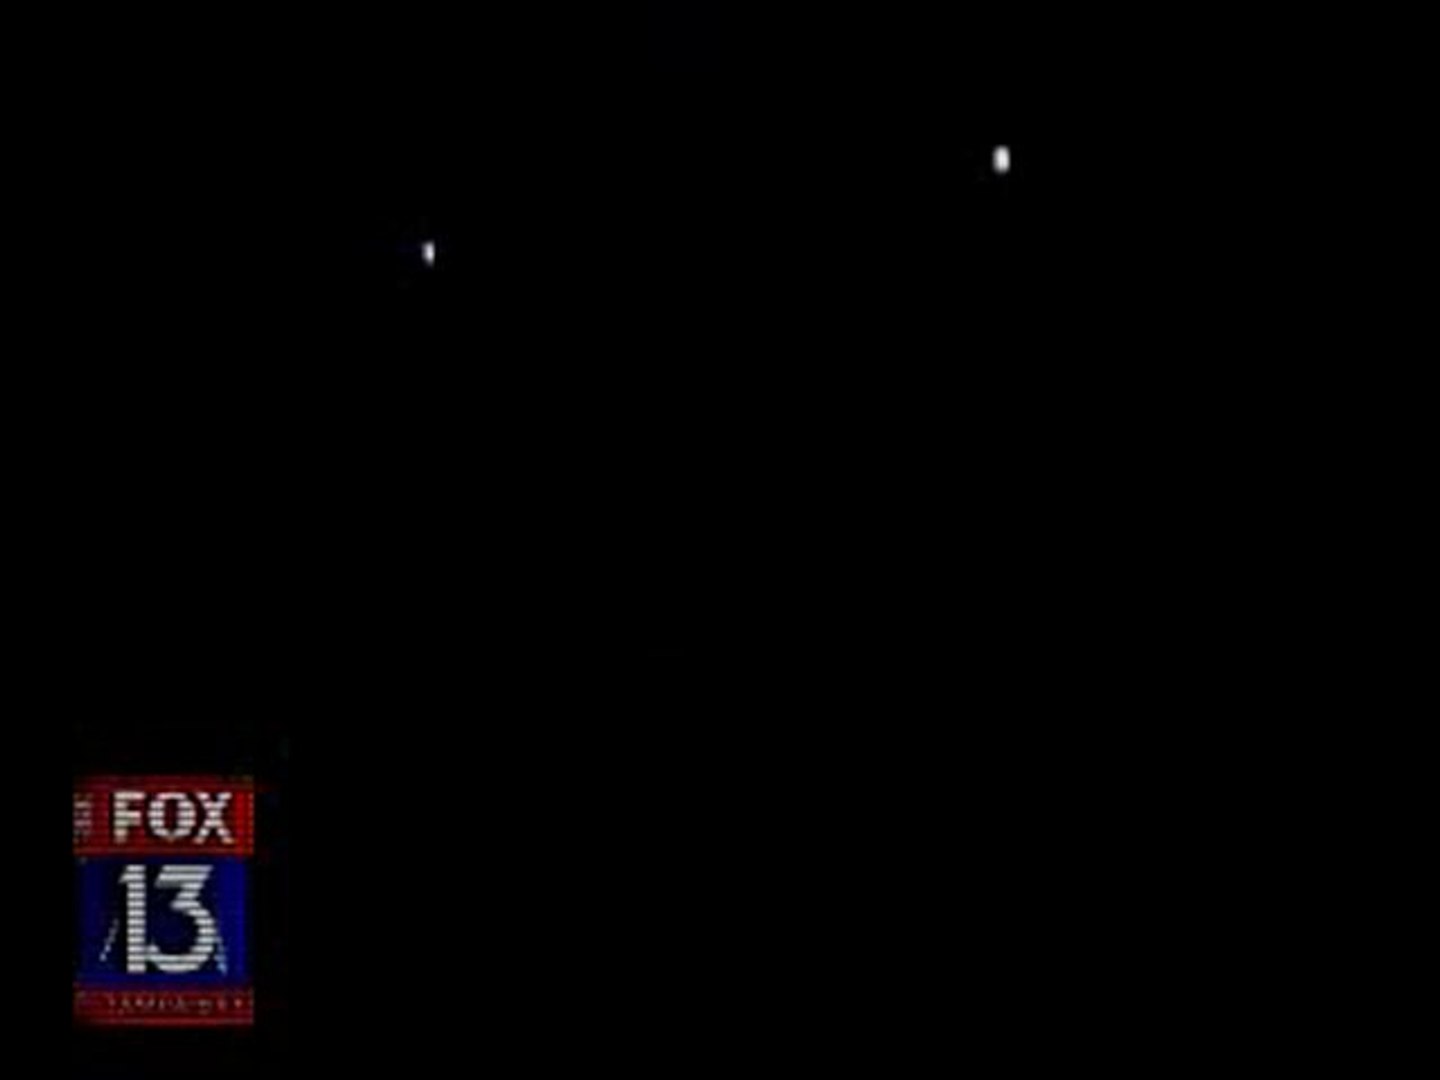 UFO IN USA - TRIANGLE IN THE NEWS - FOX 13 -USA